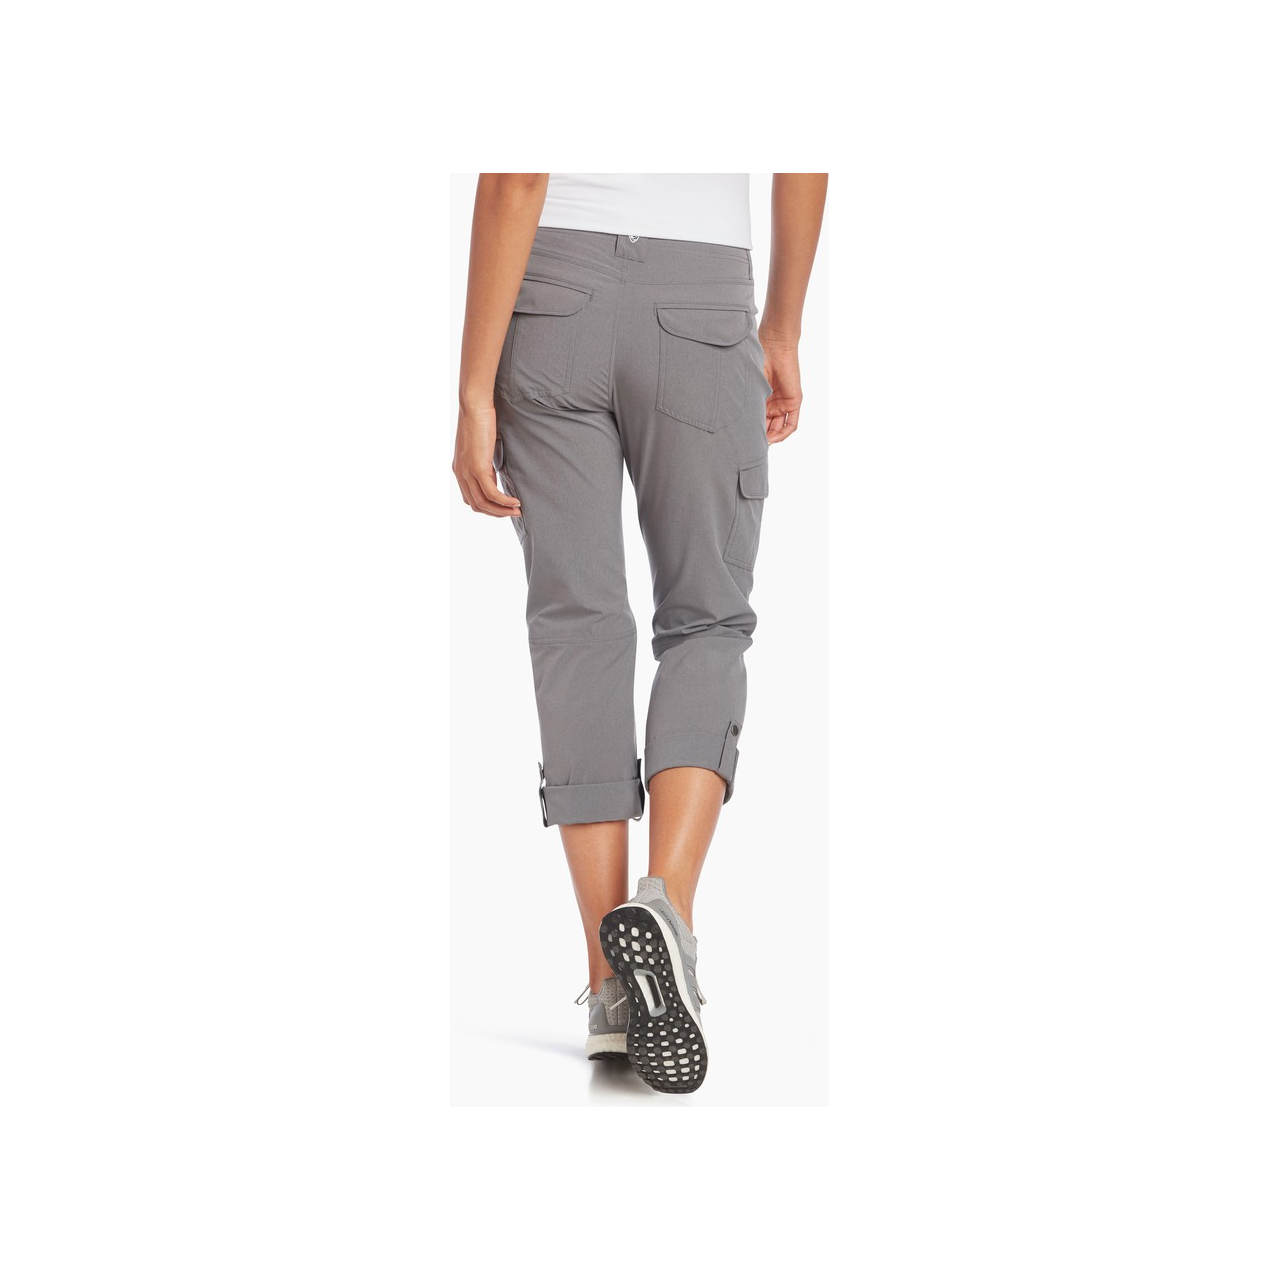 Kuhl Pants Women's 16 Reg Nylon Cargo Roll-Up Hiking Pants Gray